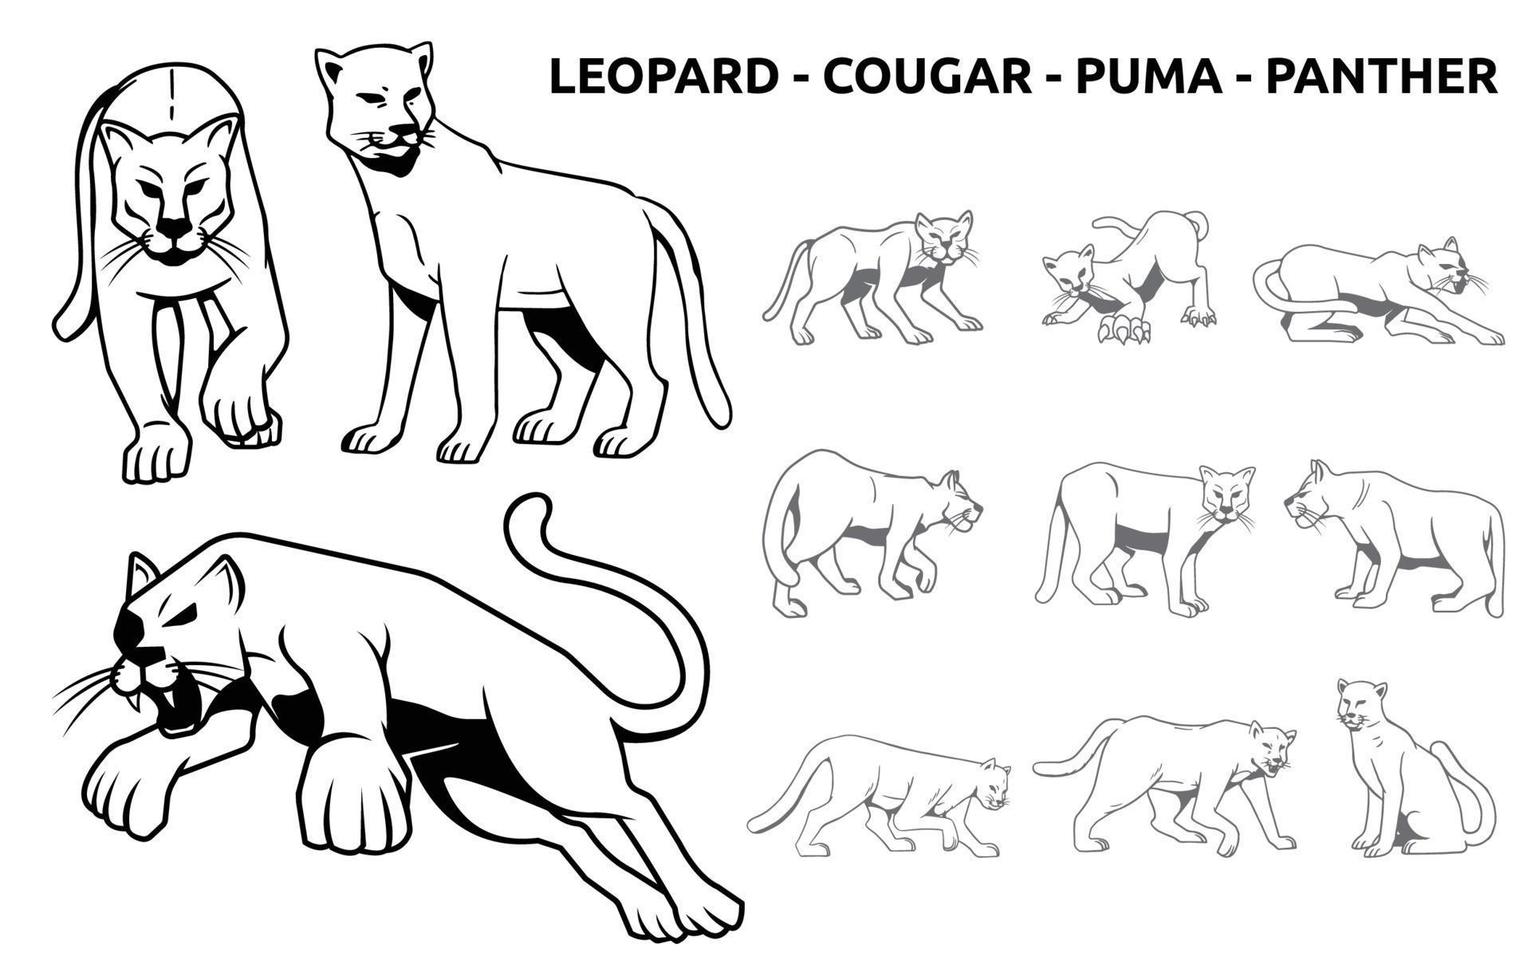 leopard cougar puma panther große katze wild lebende tiere tier silhouette vektor